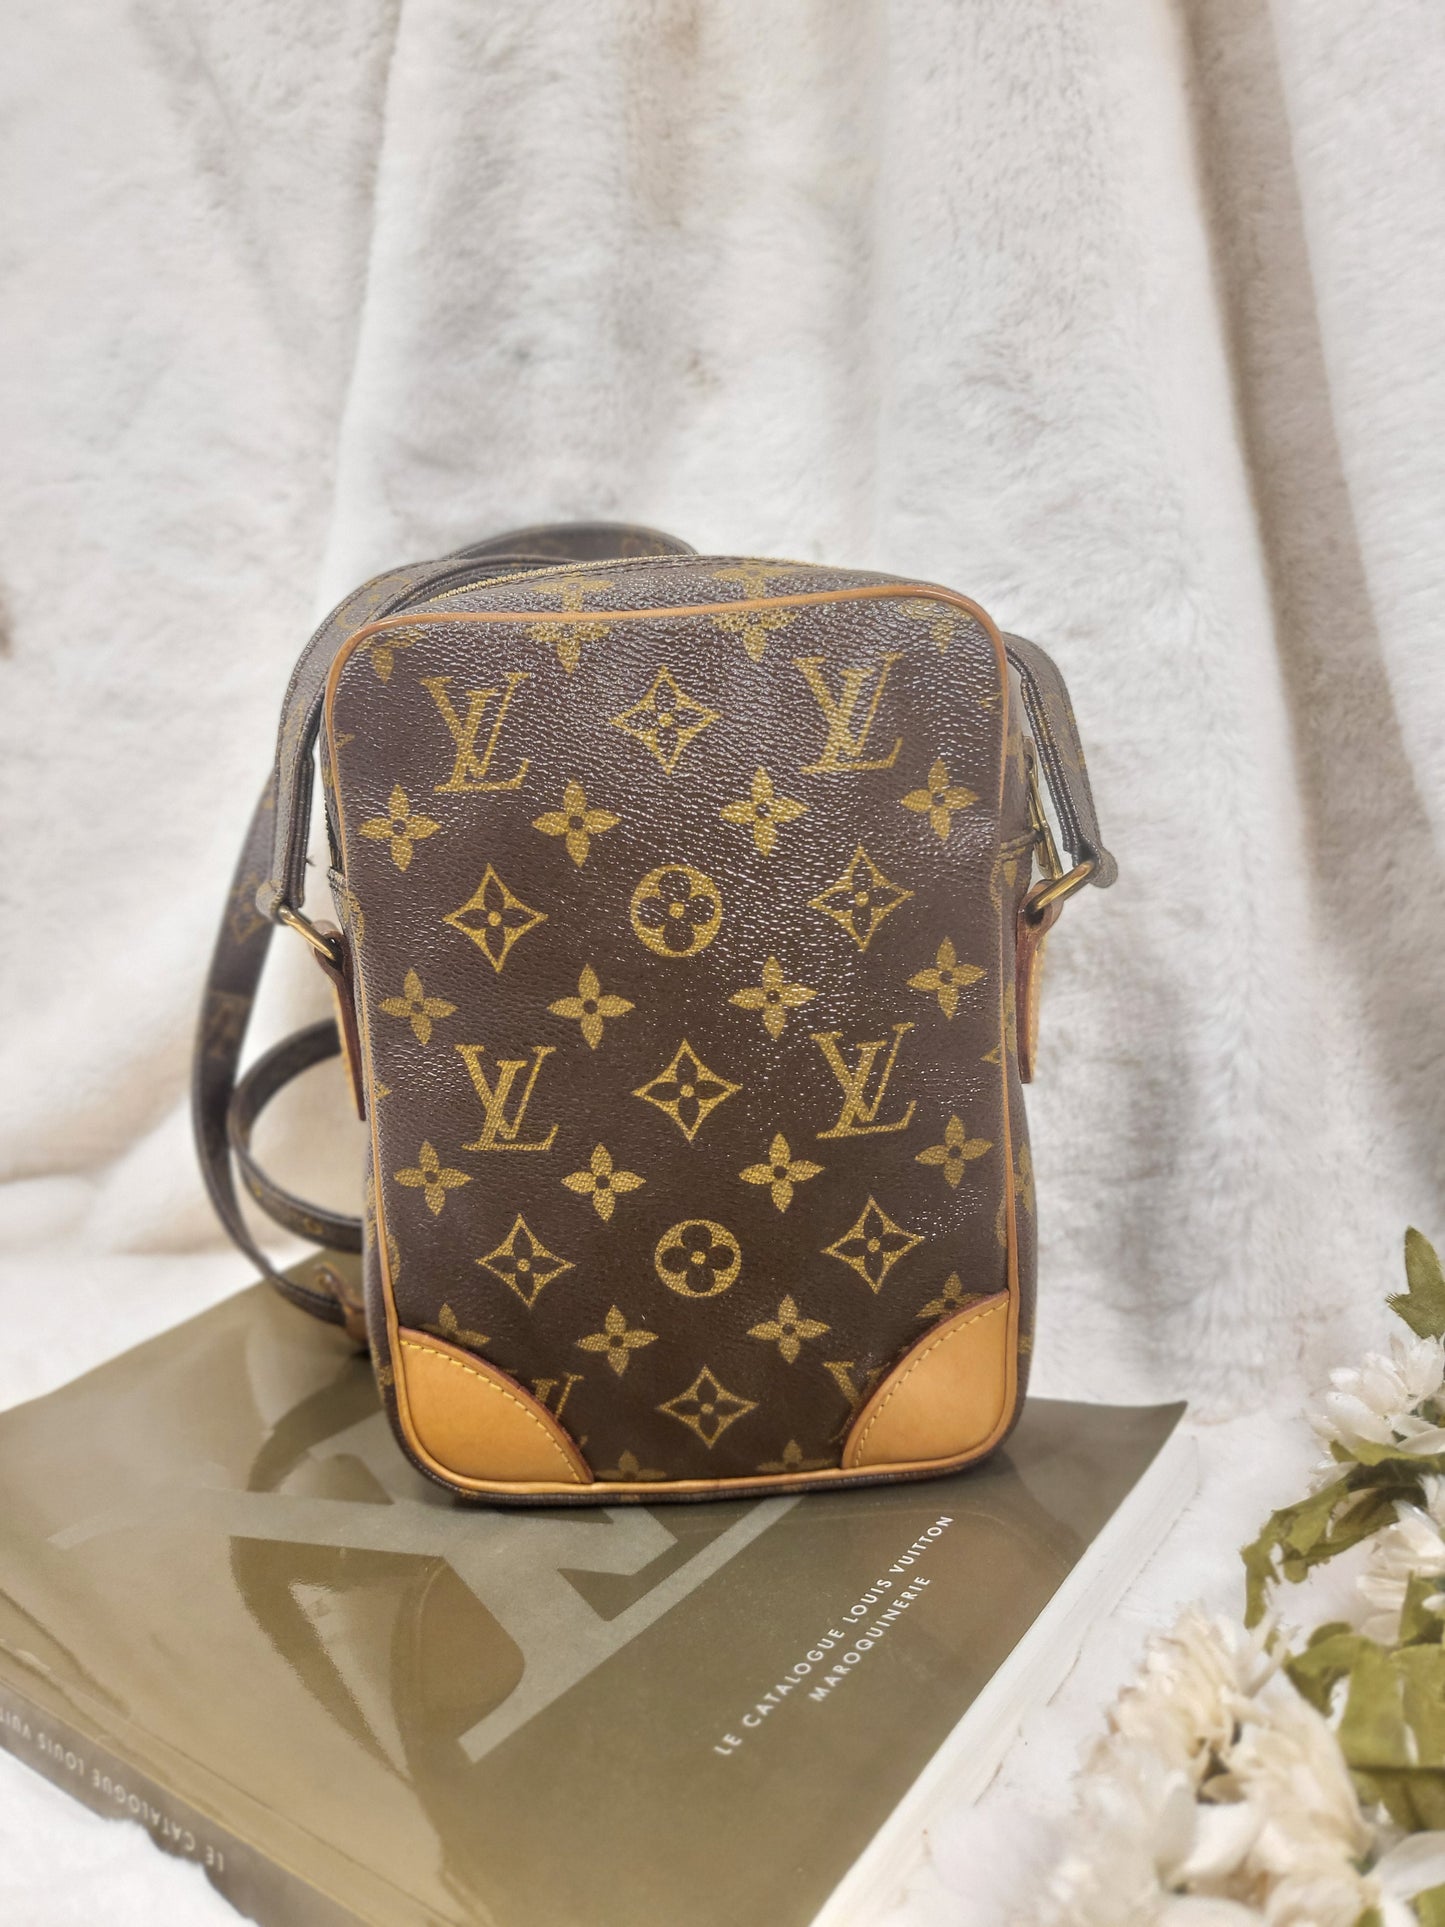 Authentic pre-owned Louis Vuitton Danube pm crossbody shoulder bag